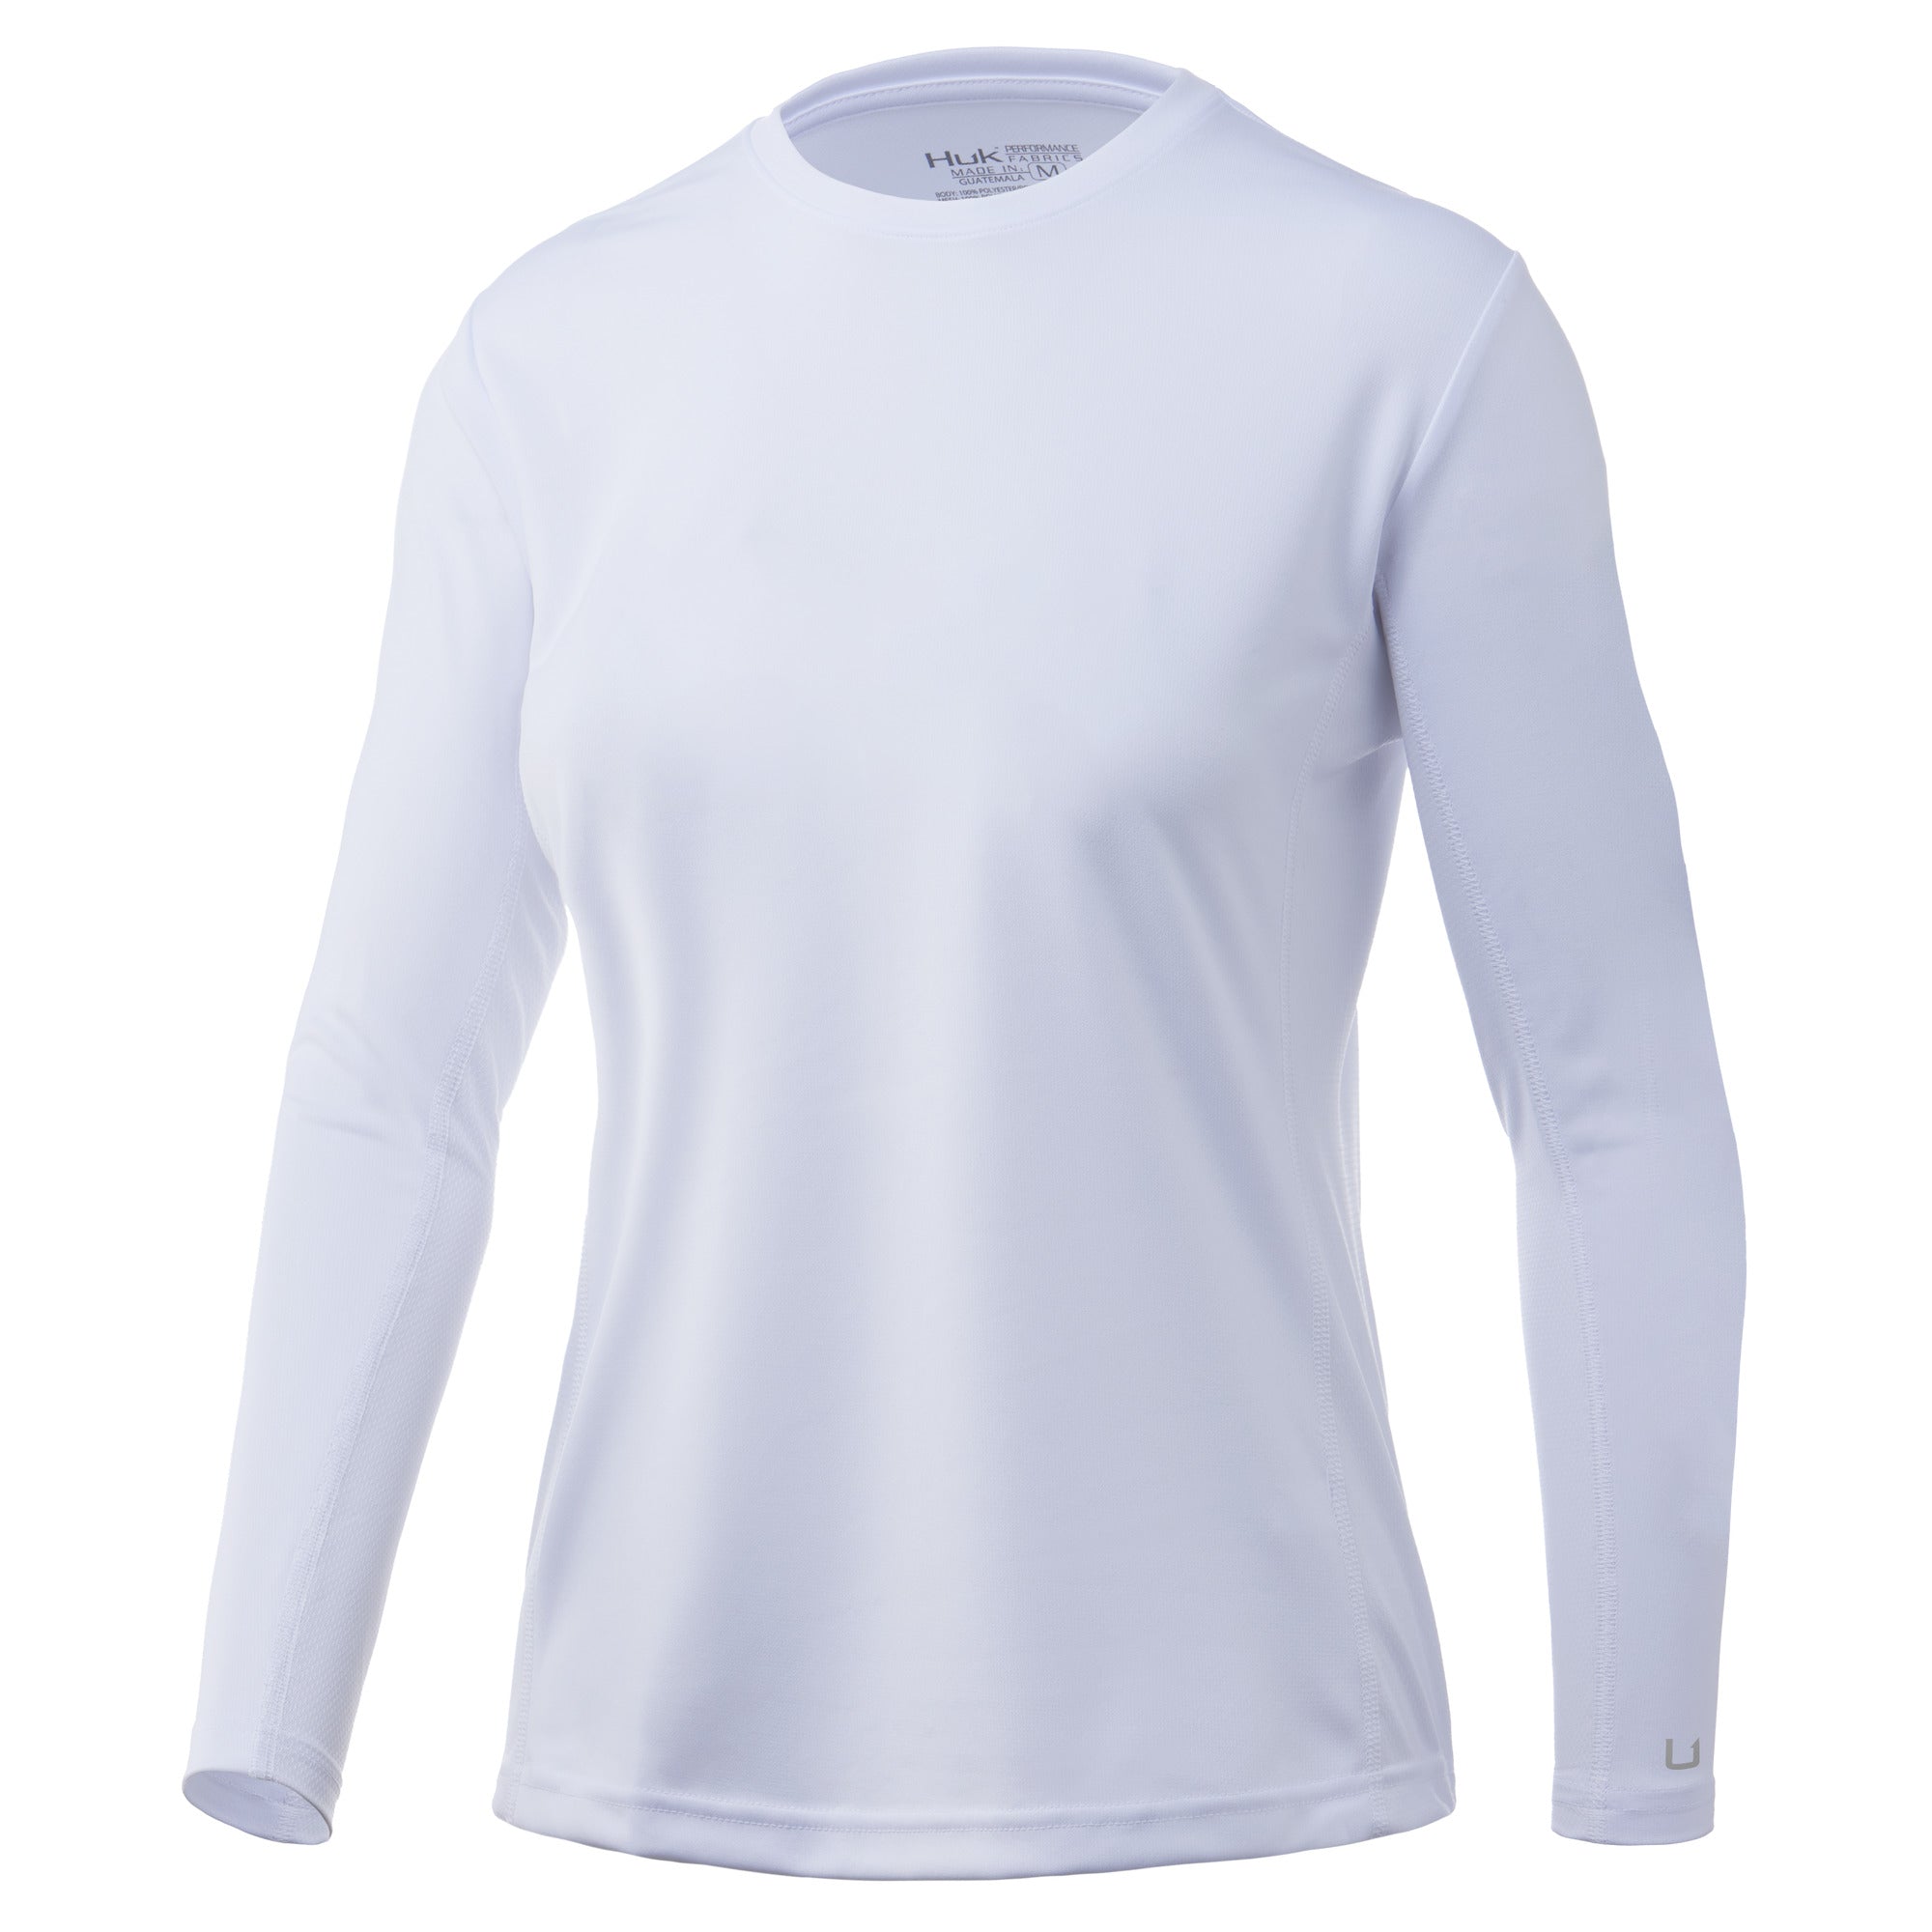 Huk Icon X Shirt - UPF 50+, Long Sleeve - Save 51%